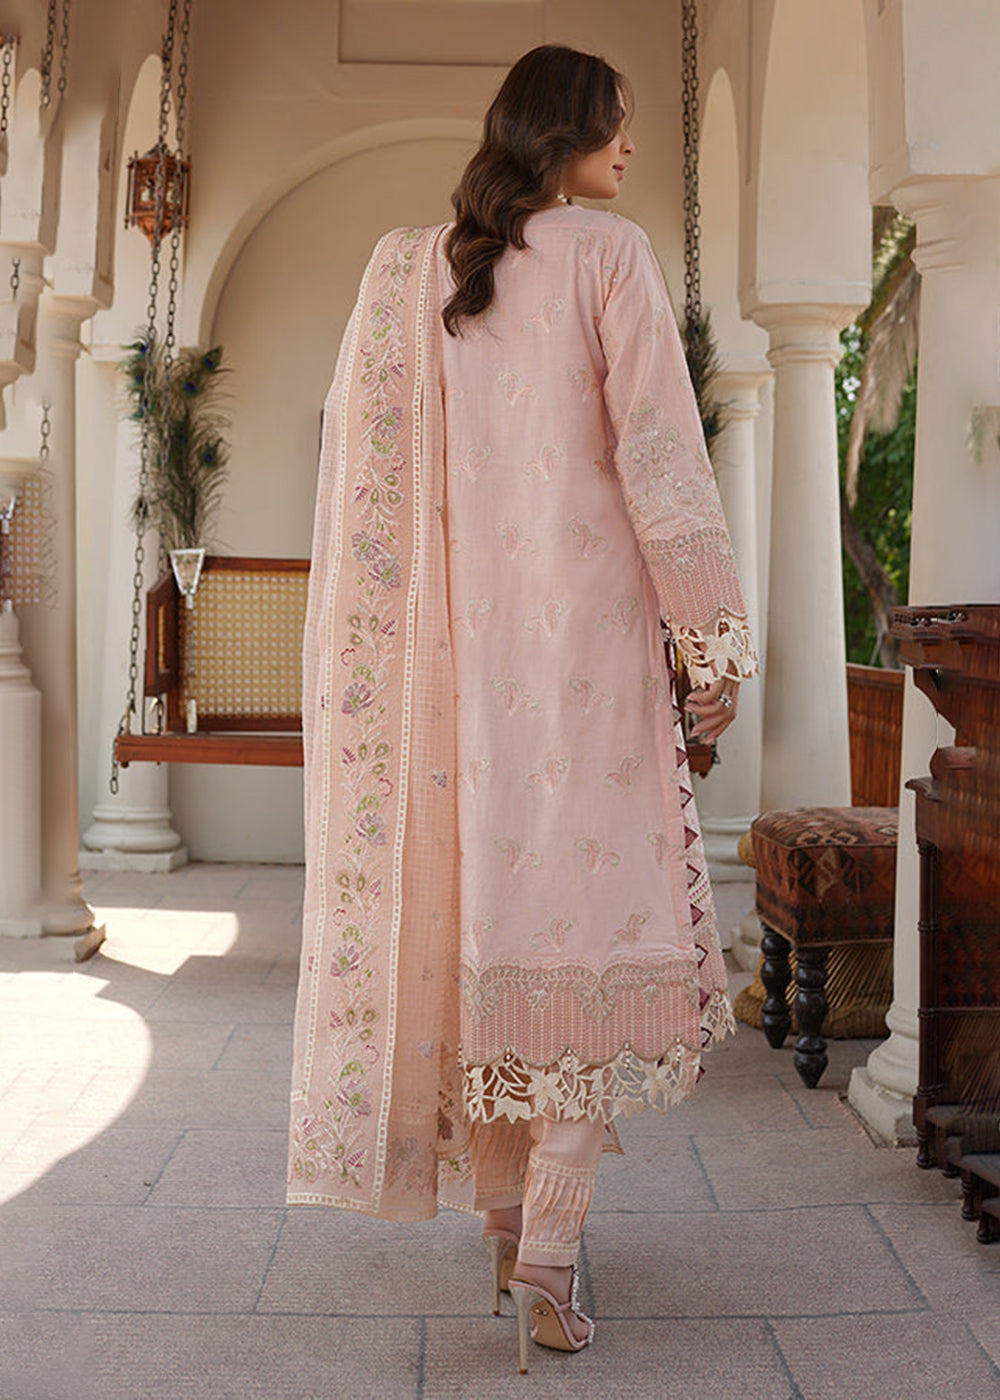 Buy Now Pink Lawn Dress - Bahaar Luxury Lawn by Mariyam's - Lara B-1015 Online in USA, UK, Canada & Worldwide at Empress Clothing. 